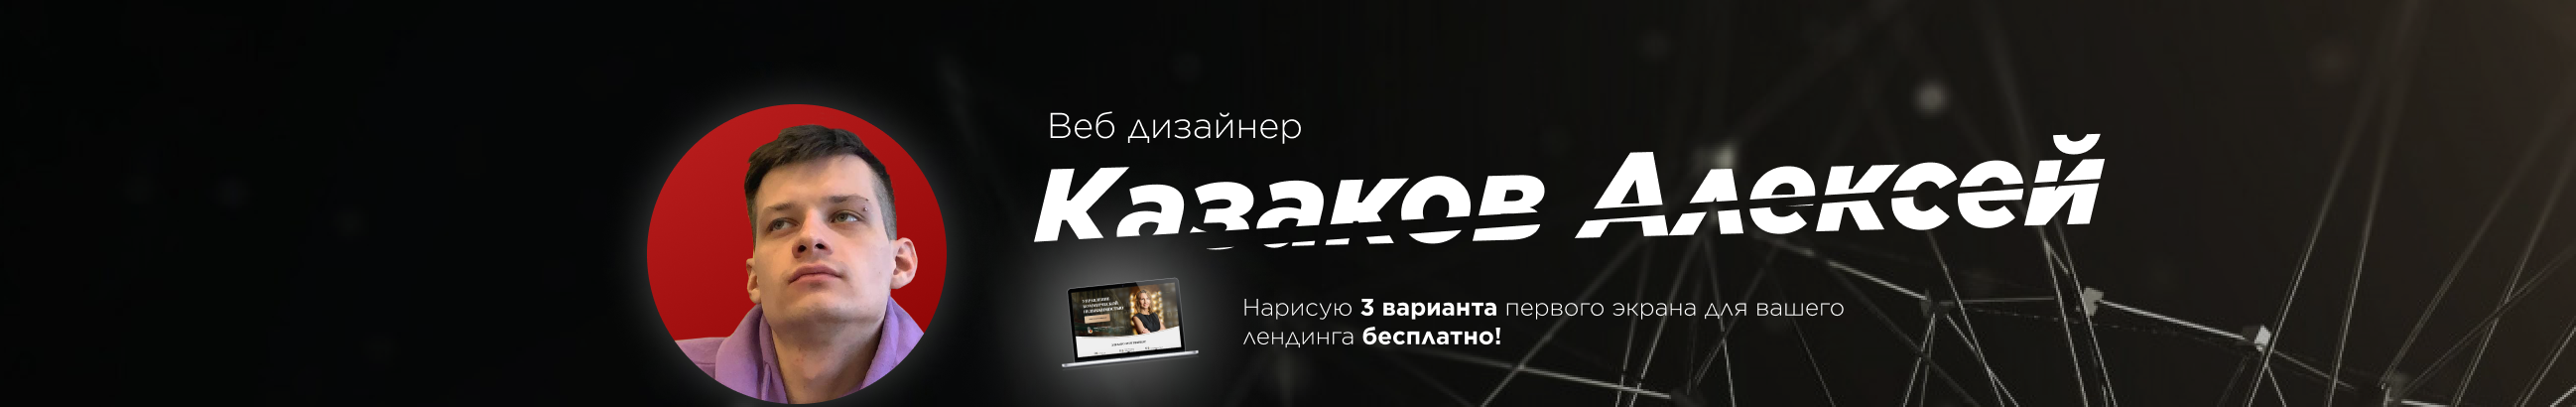 Алексей Казаков's profile banner